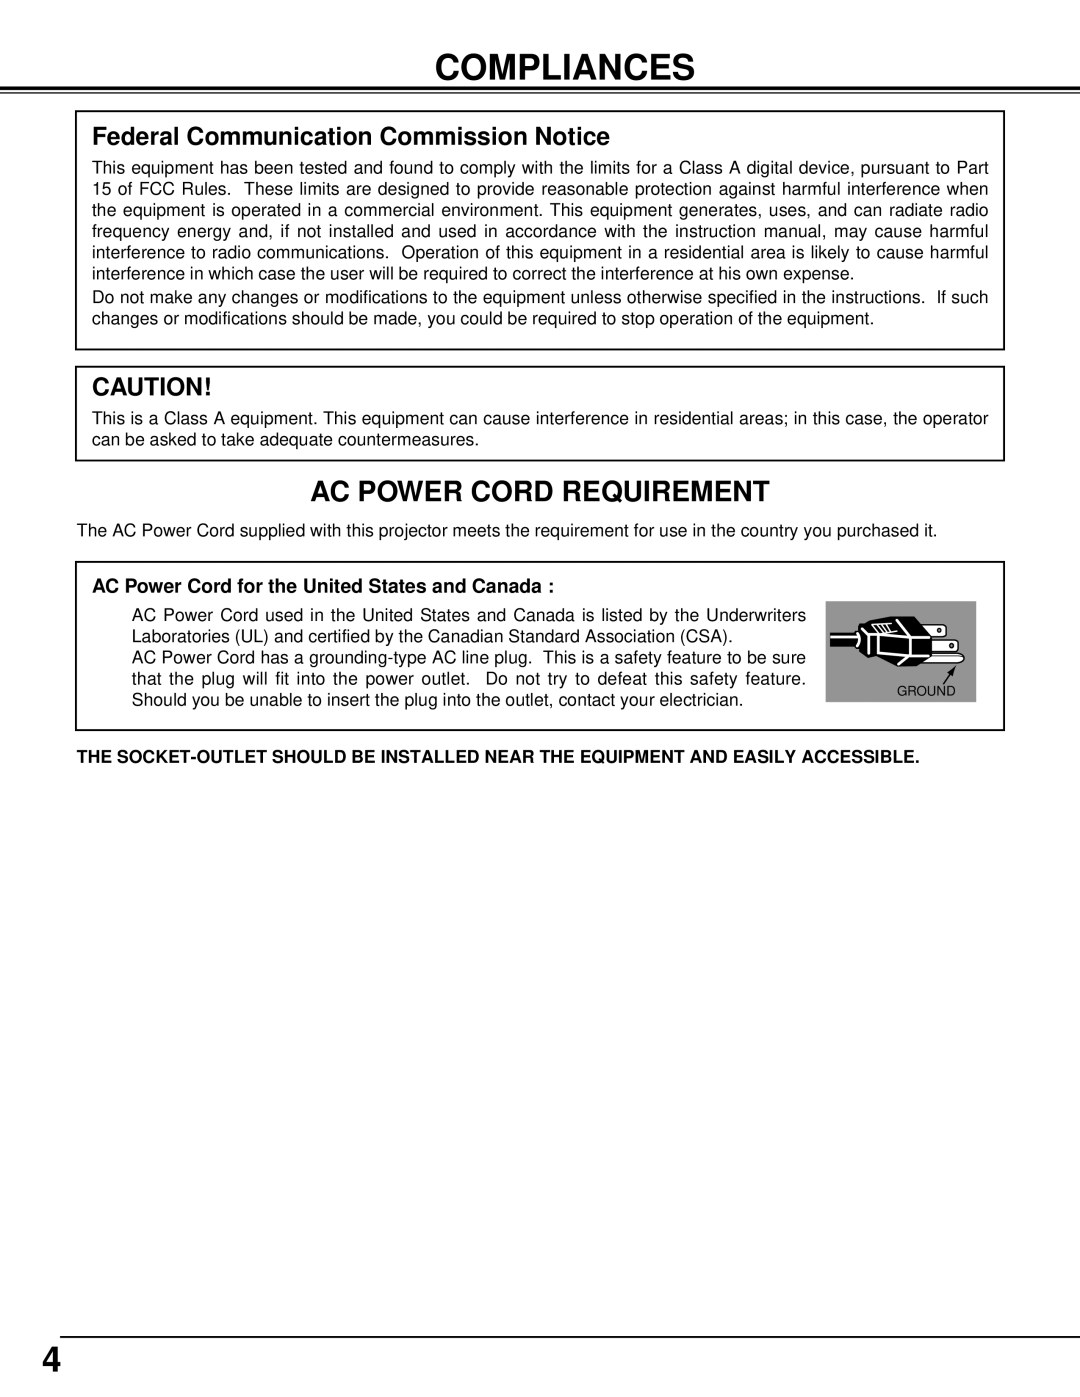 Eiki LC-XT3 instruction manual Compliances, Federal Communication Commission Notice 